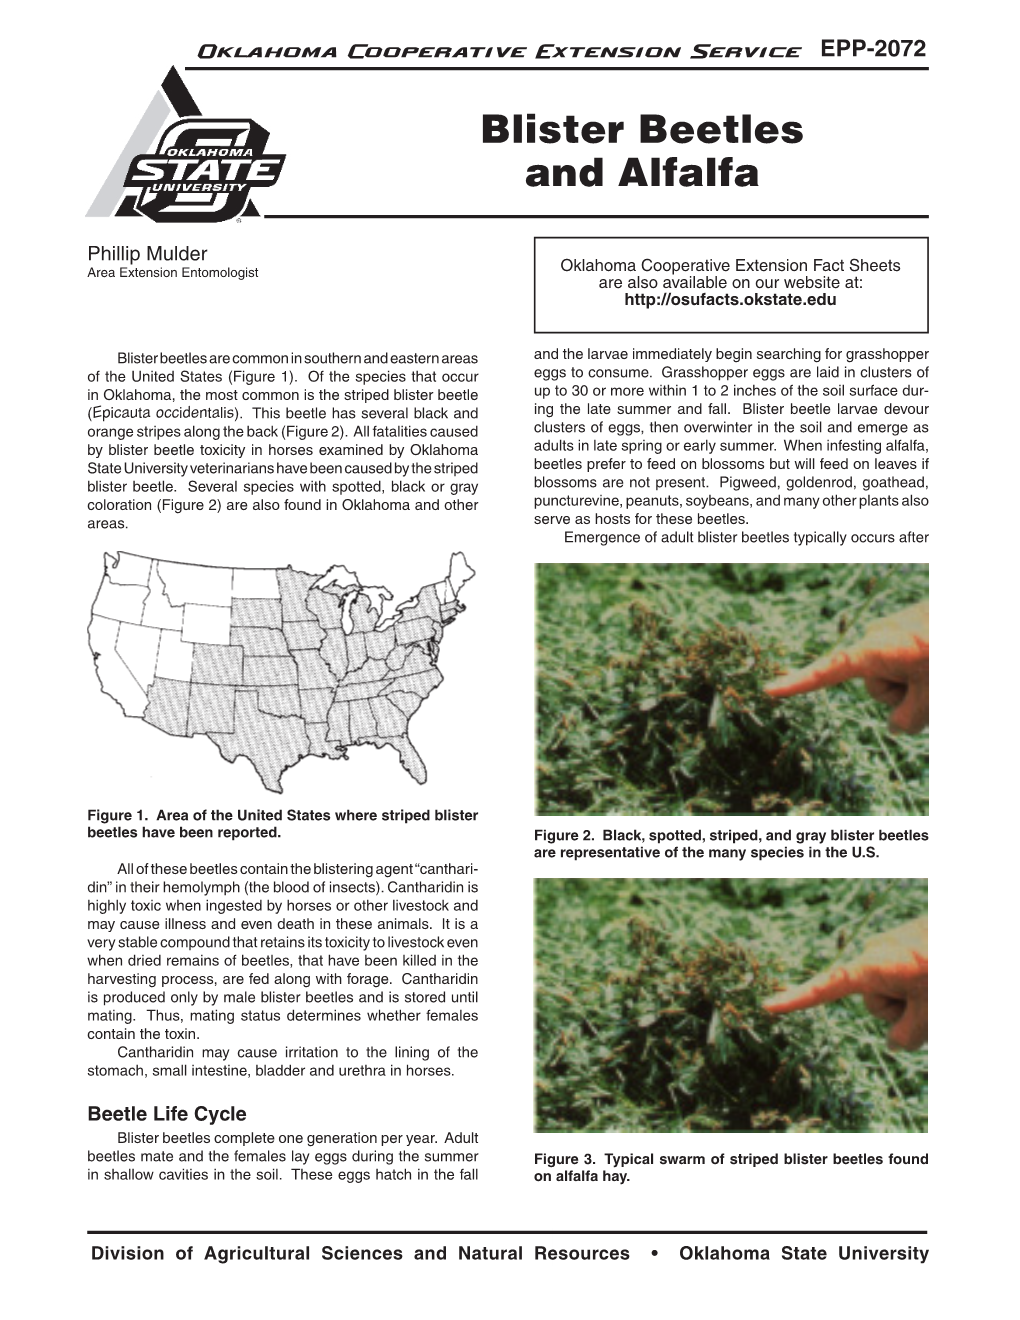 Blister Beetles and Alfalfa